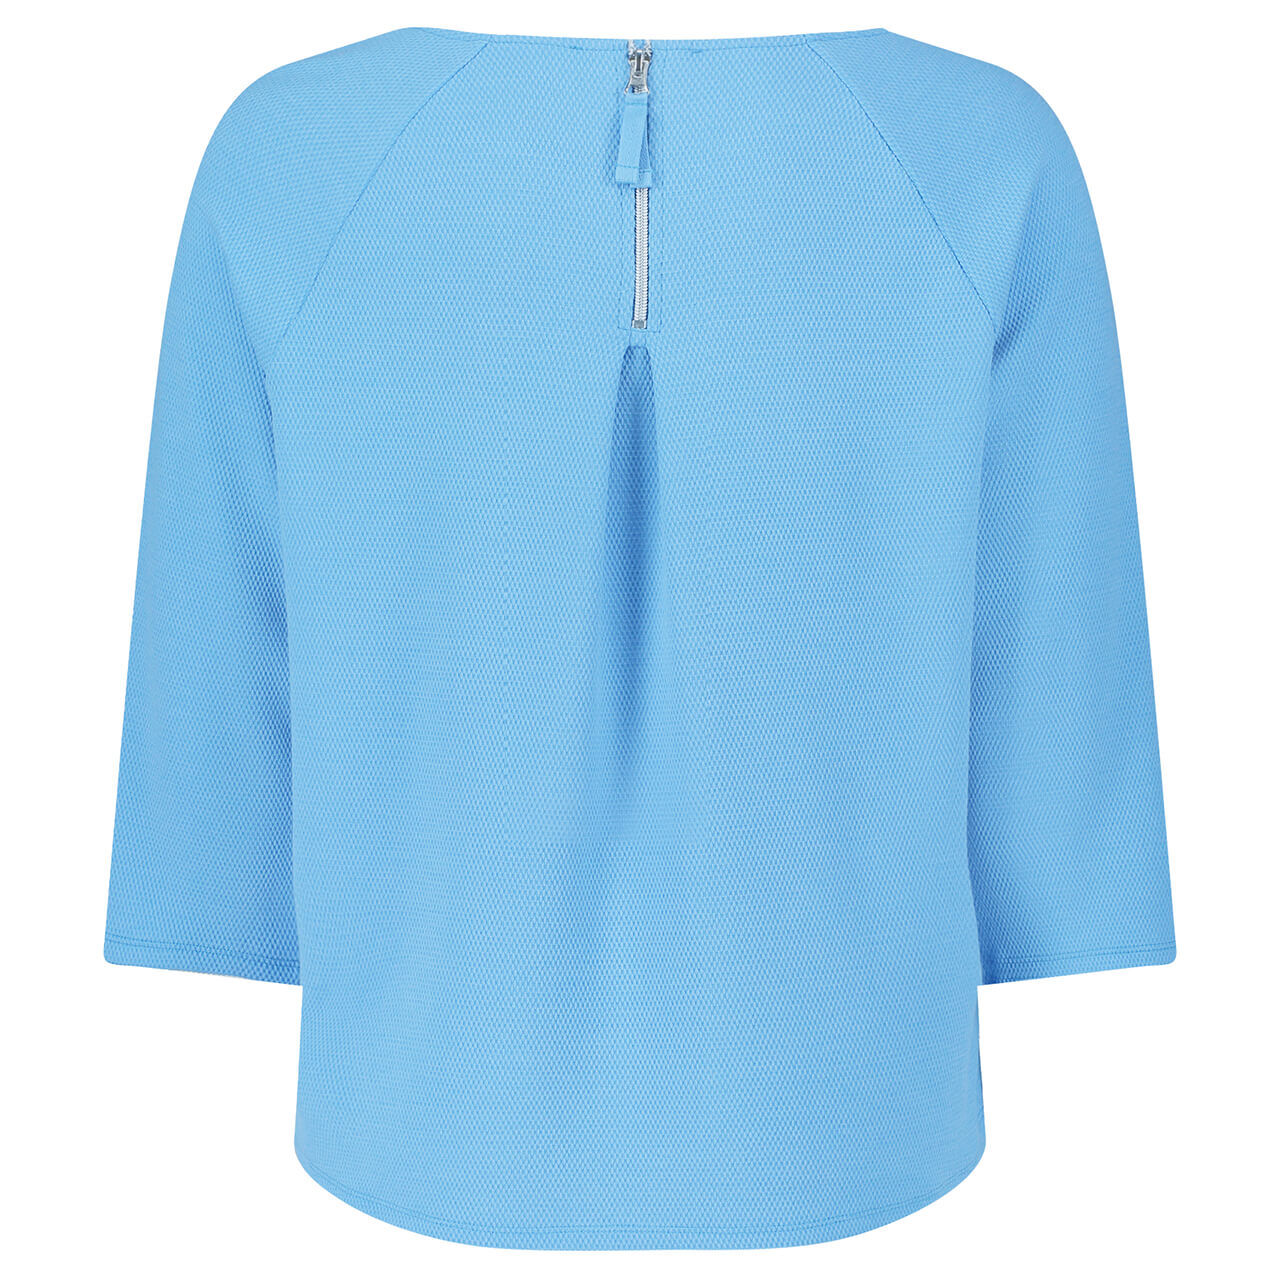 Betty Barclay Damen 3/4 Arm Sweatshirt azure blue